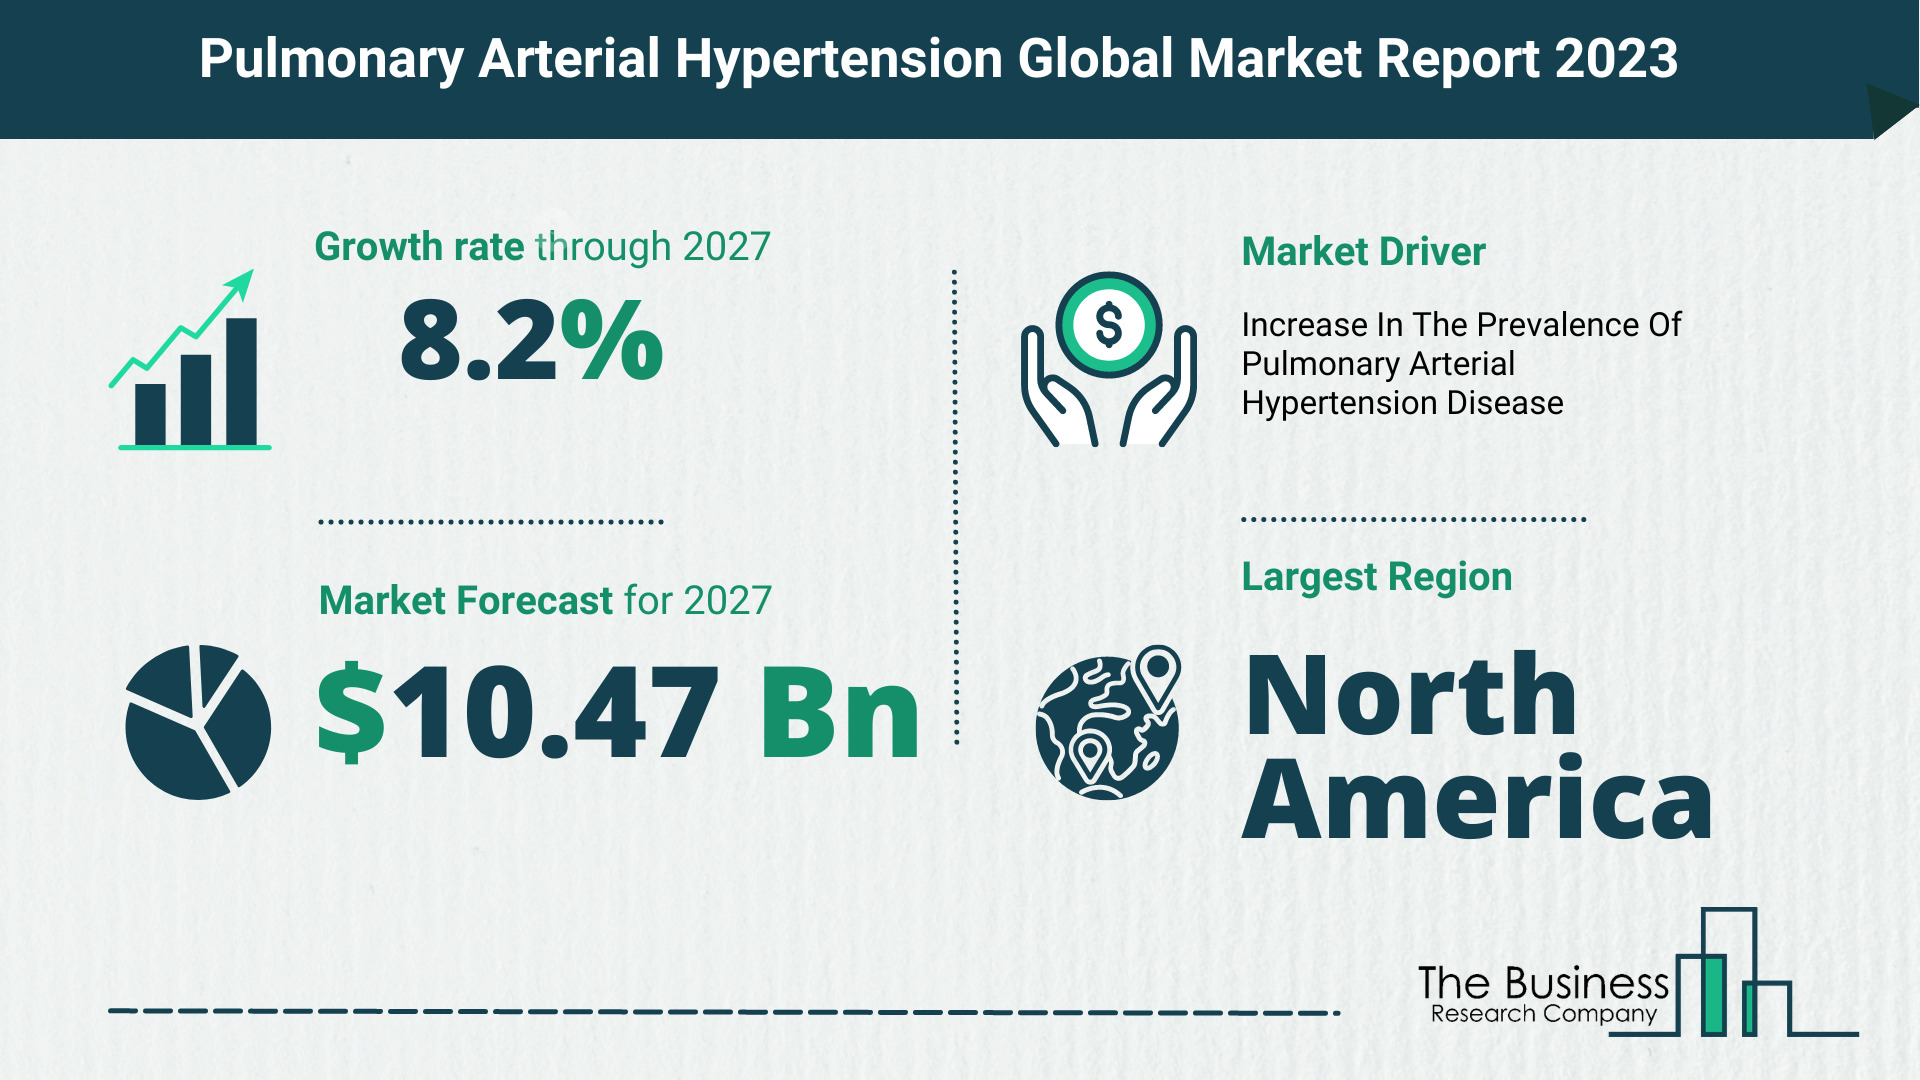 Global Pulmonary Arterial Hypertension Market Opportunities And Strategies 2023